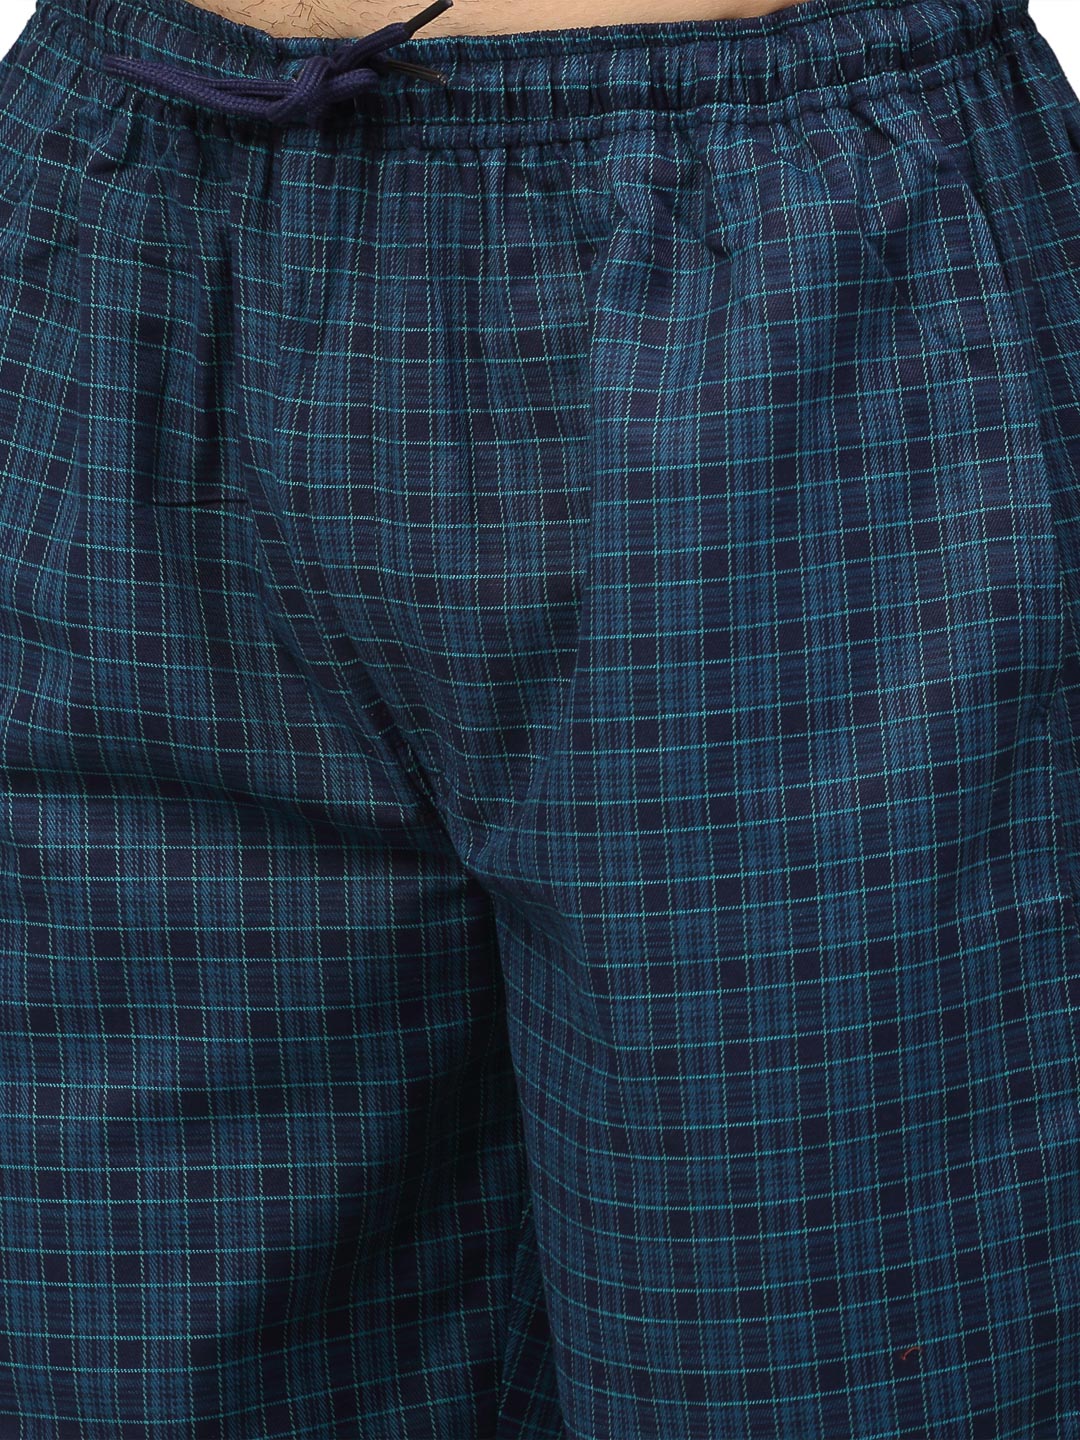 Jainish Men's Blue Cotton Checked Track Pants